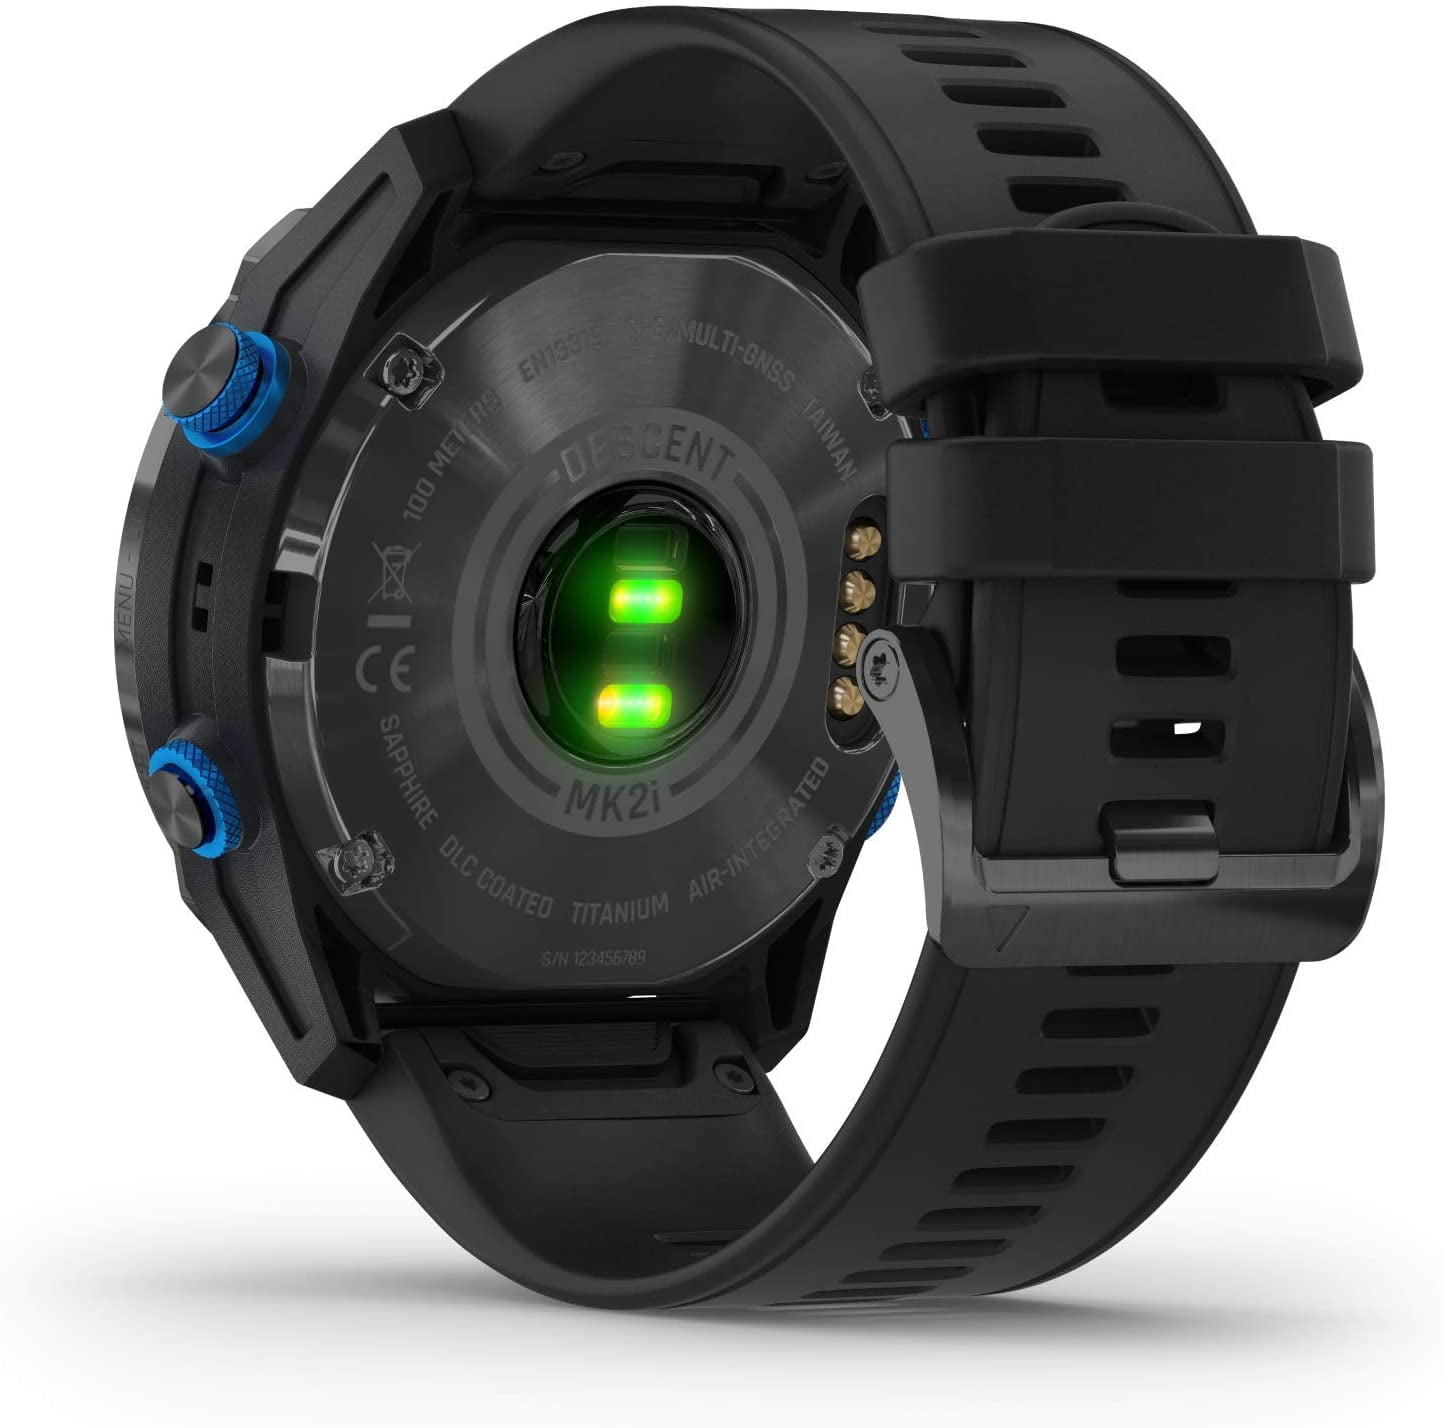 Garmin Descent Mk2i Watch Style Dive Computer Titanium with Black